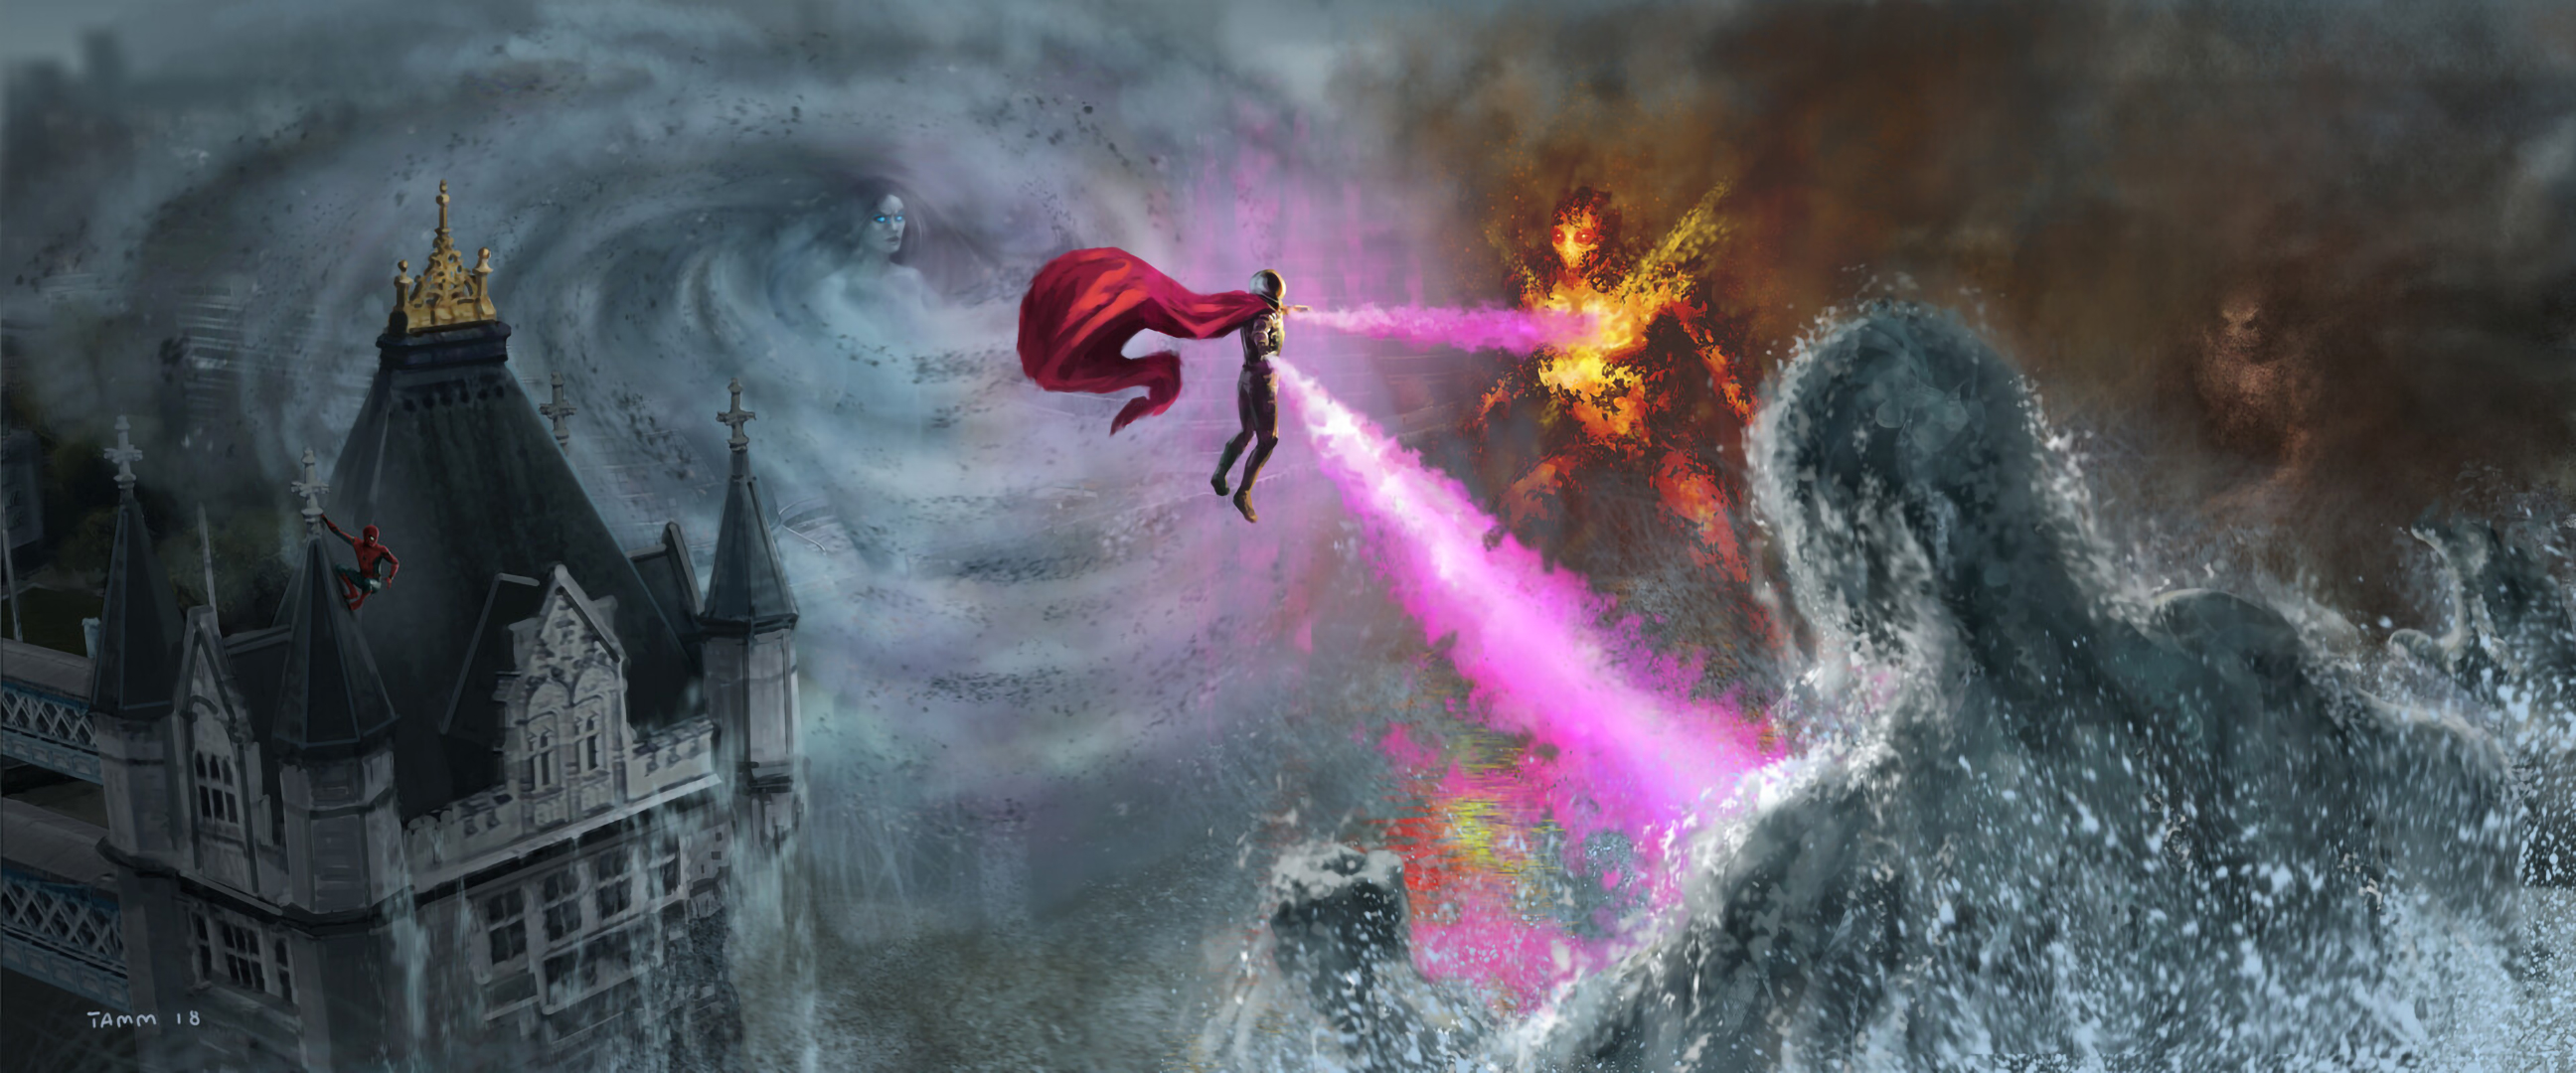 Mysterio vs Elementals Wallpaper, HD Movies 4K Wallpaper